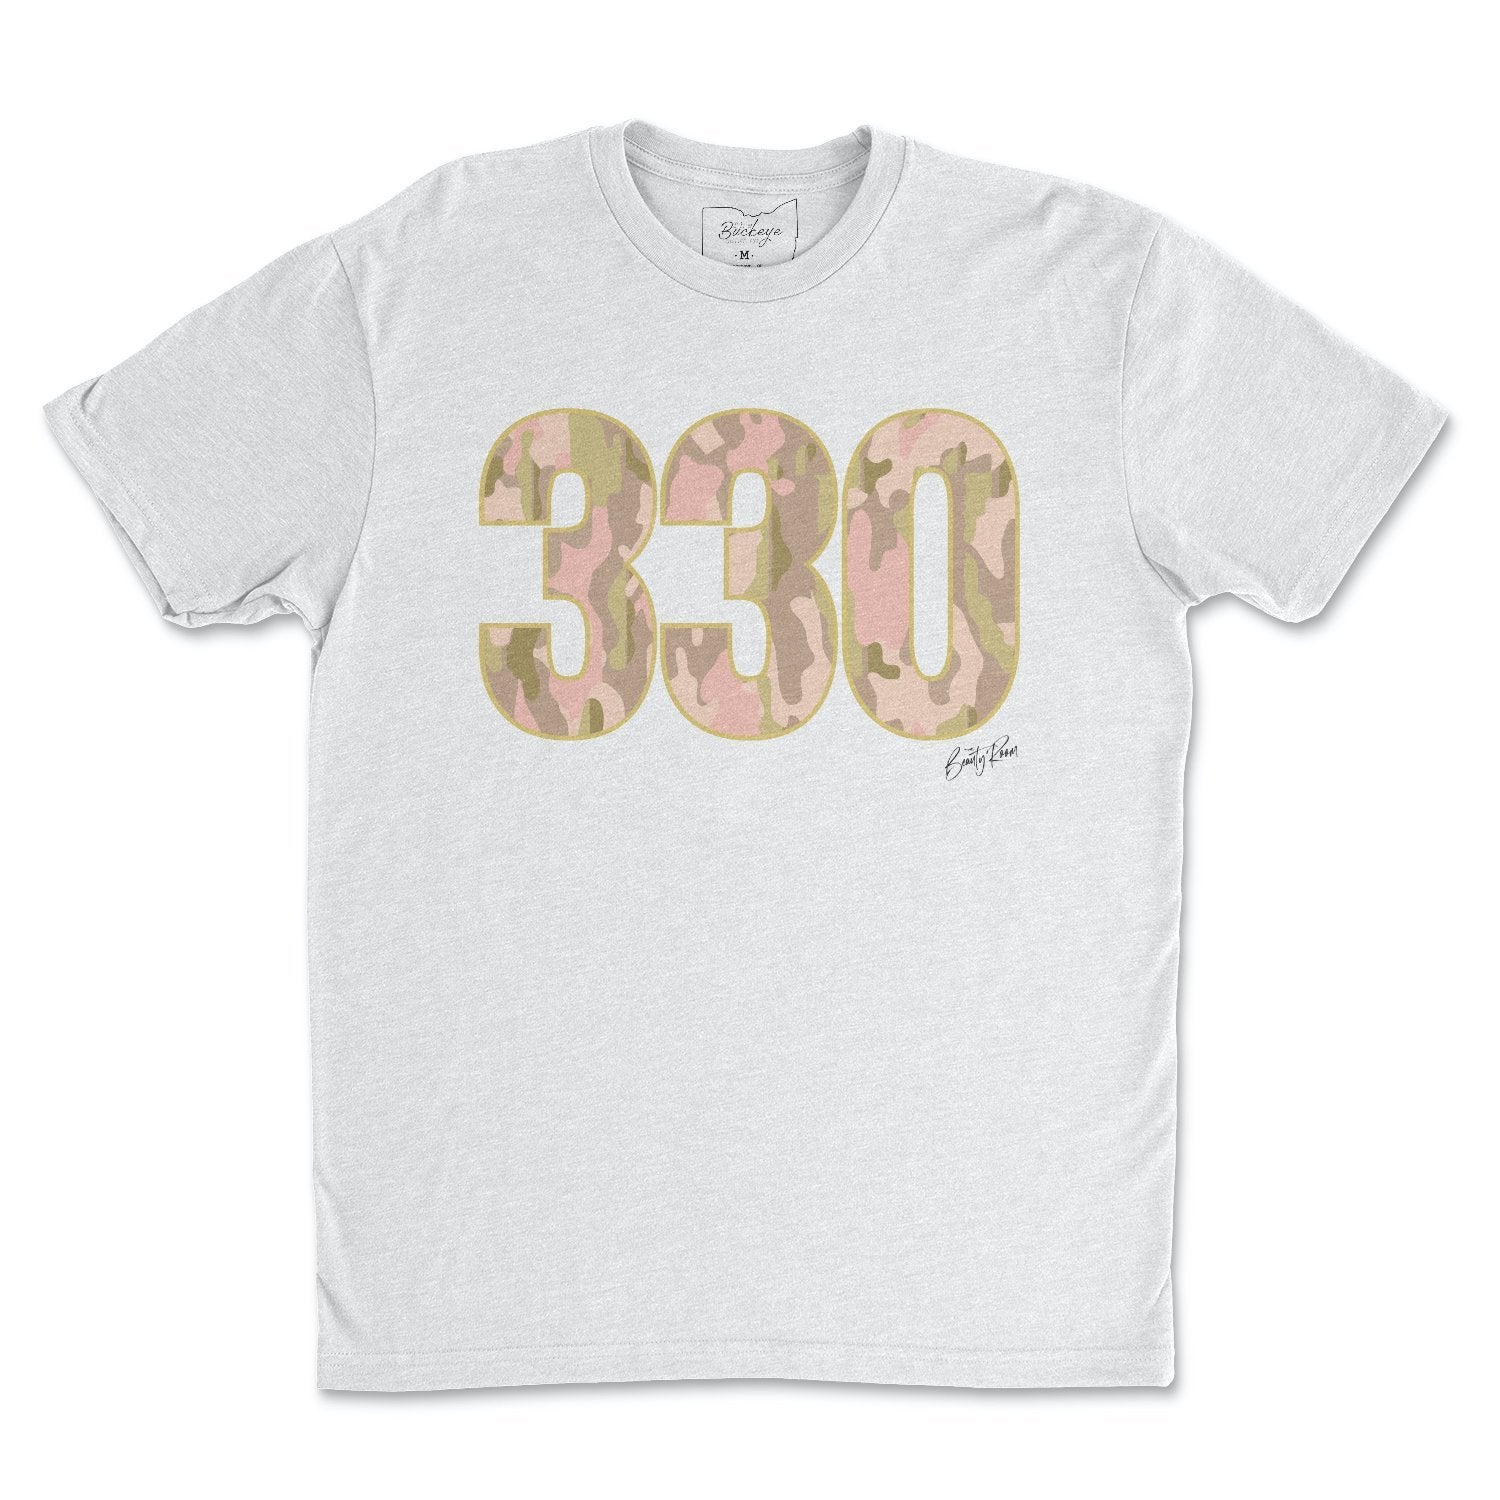 330 Beauty Room T-Shirt - Buckeye Shirt Co.